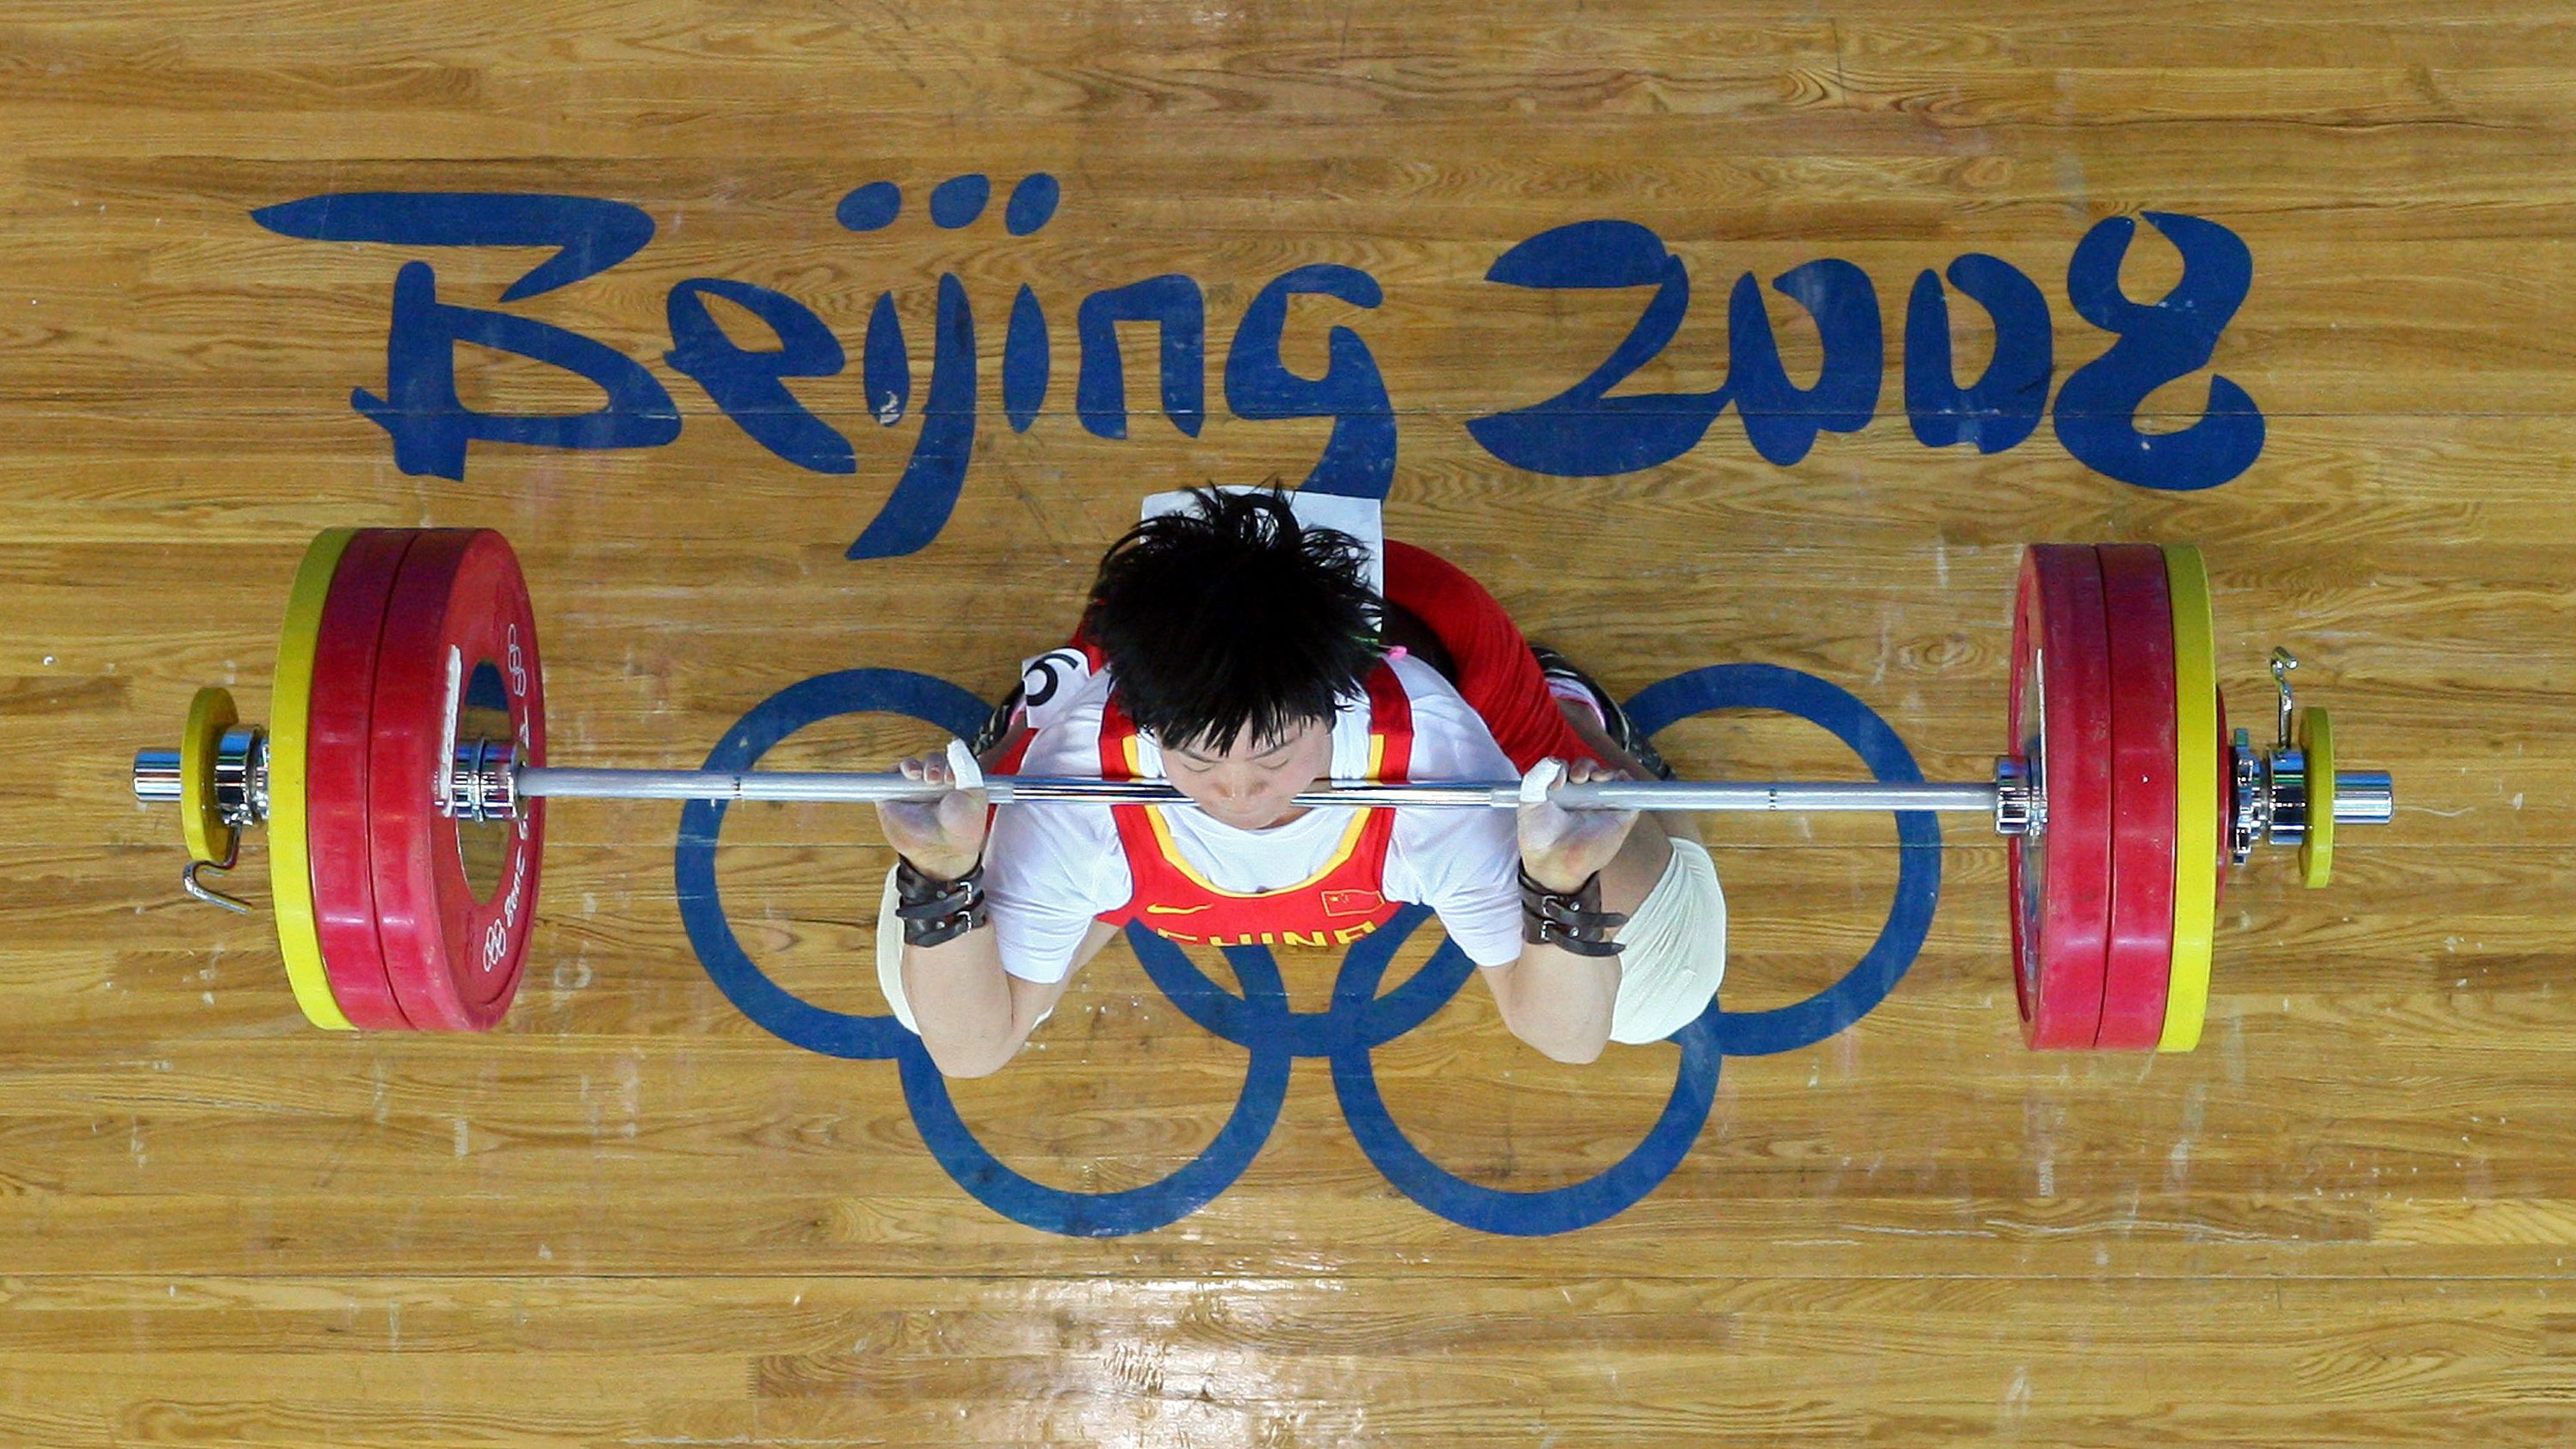 Liu Chunhong of China competes at the 2008 Olympic Games in Beijing, China.